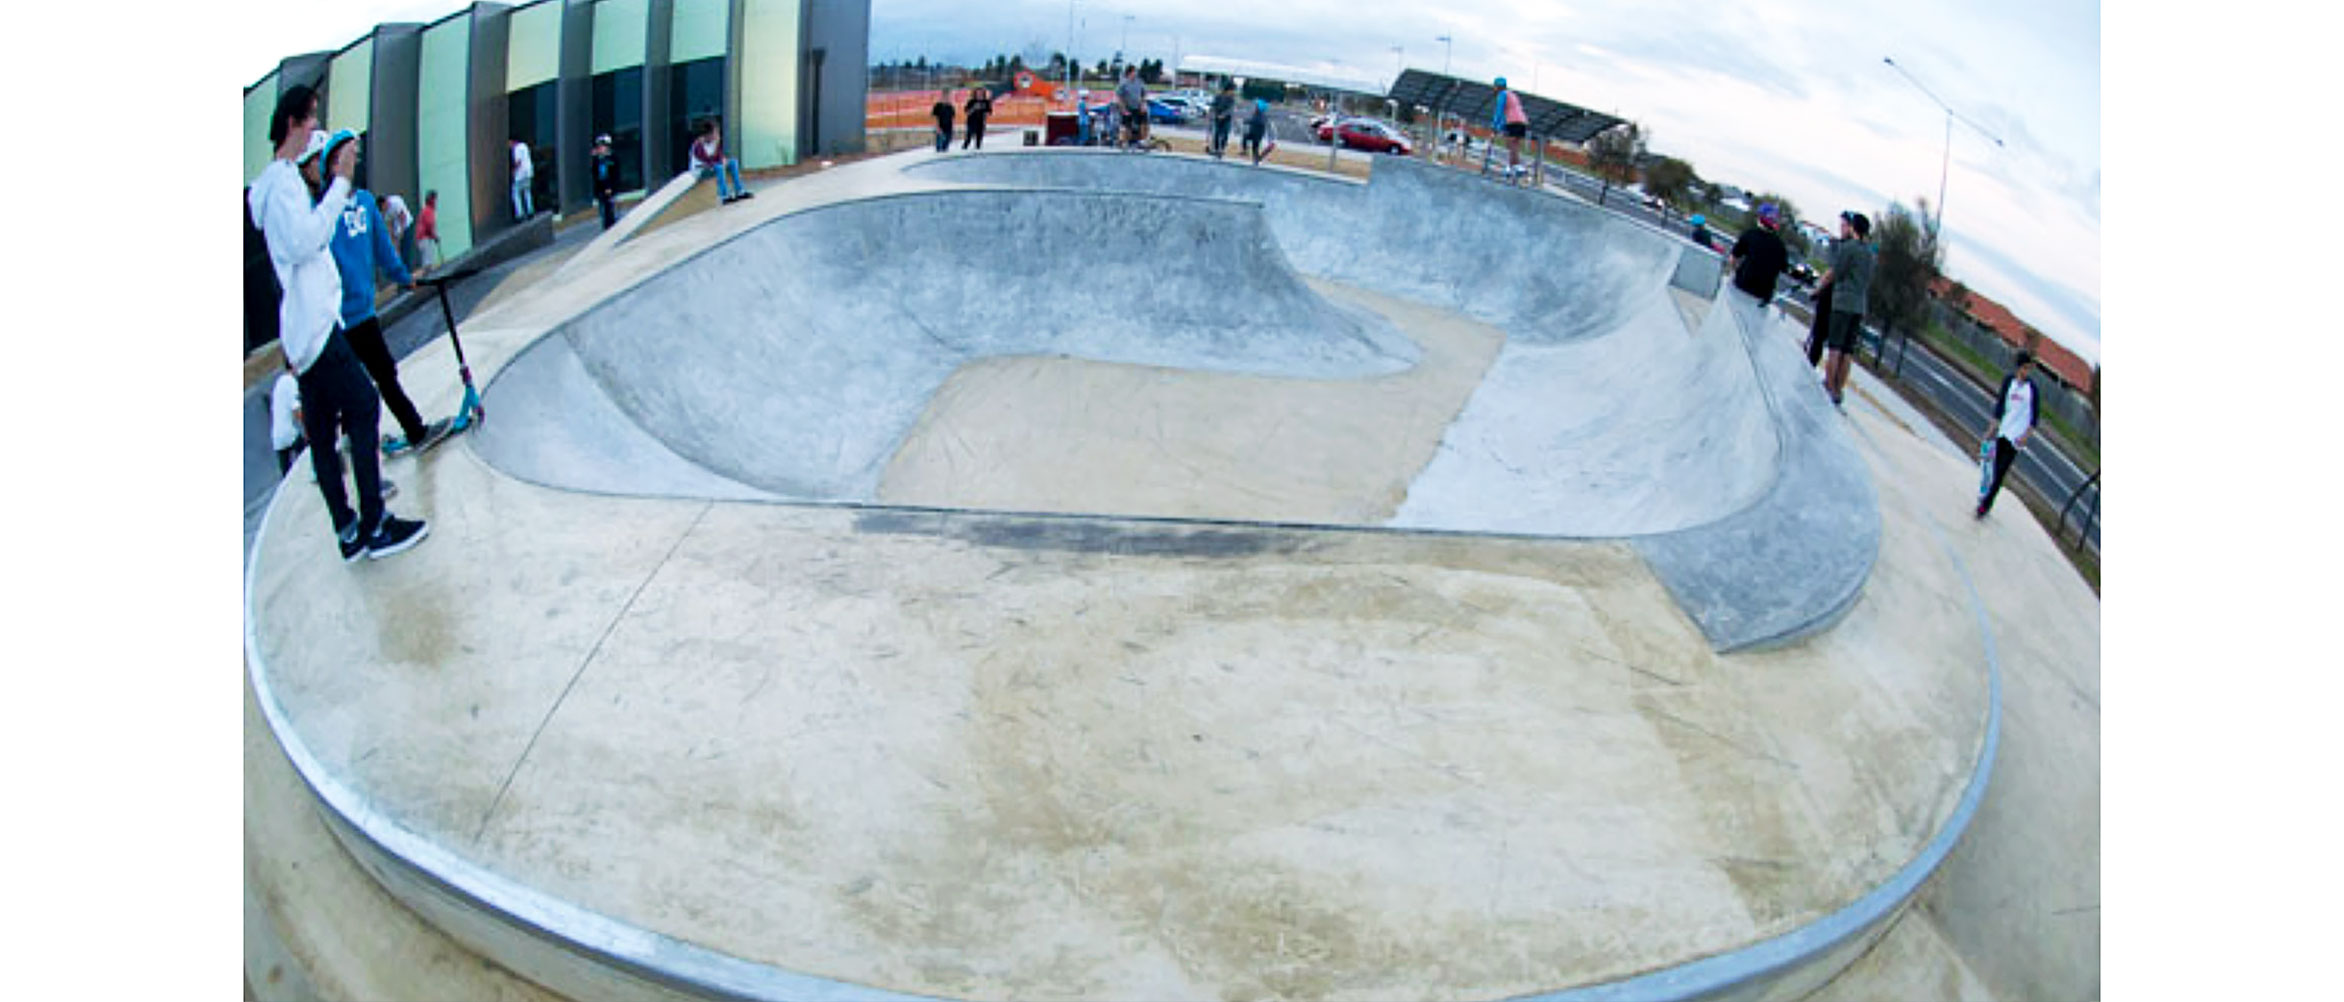 Taylors Hill skate bowl, Concrete Skateparks